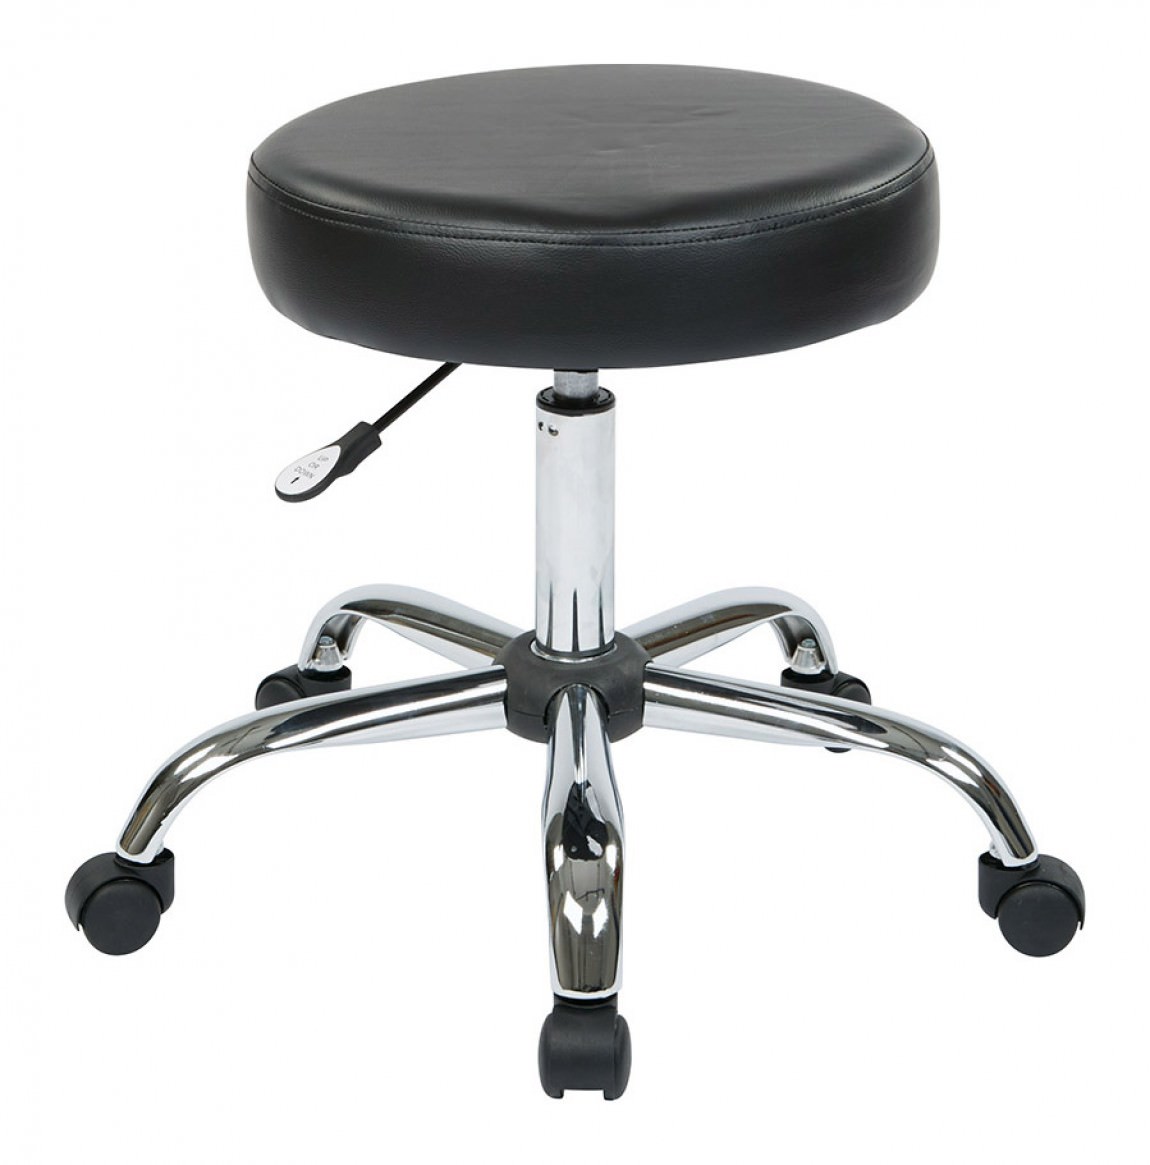 https://madisonliquidators.com/images/p/1150/24873-adjustable-height-stool-1.jpg